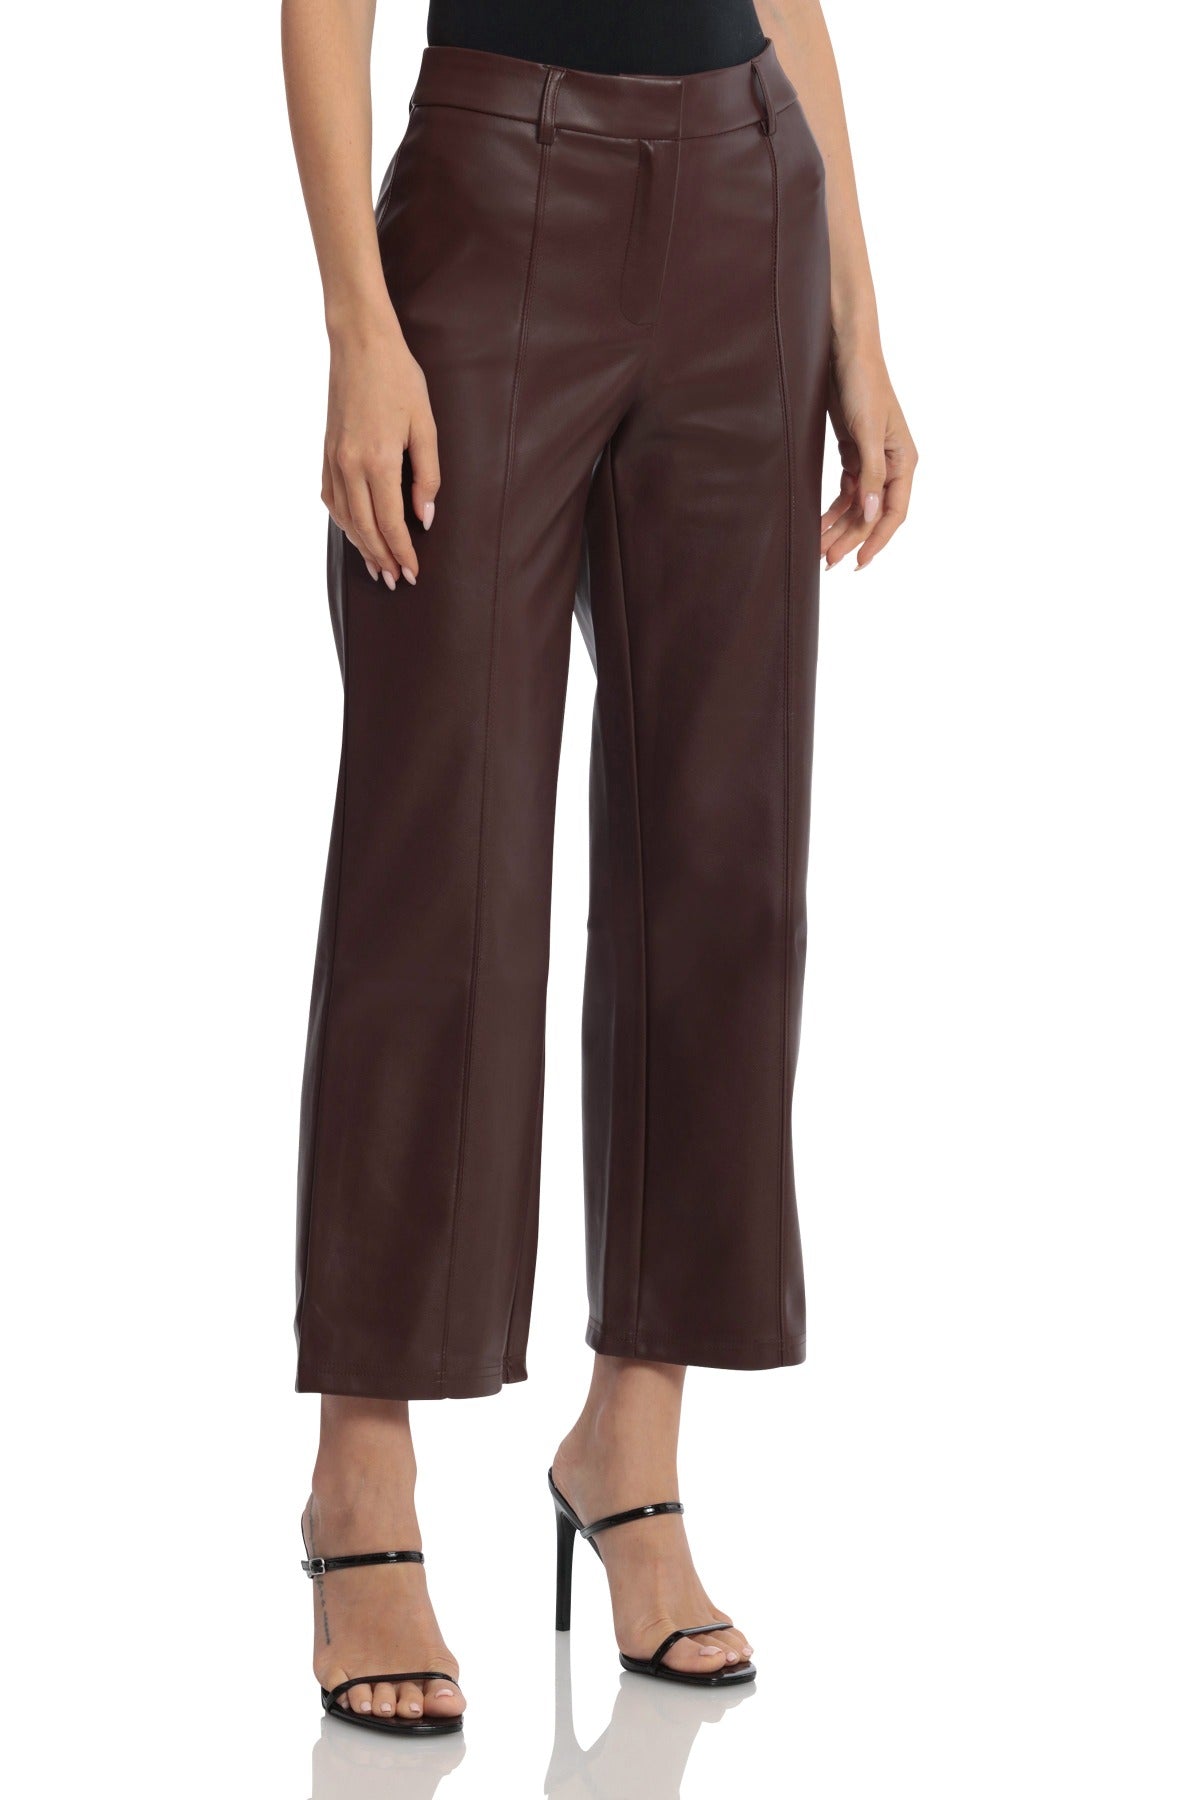 Faux Leather Seam-Front Straight Leg Trouser Pants Chocolate Brown - Figure Flattering Designer Fashion Bottoms for Women by Avec Les Filles